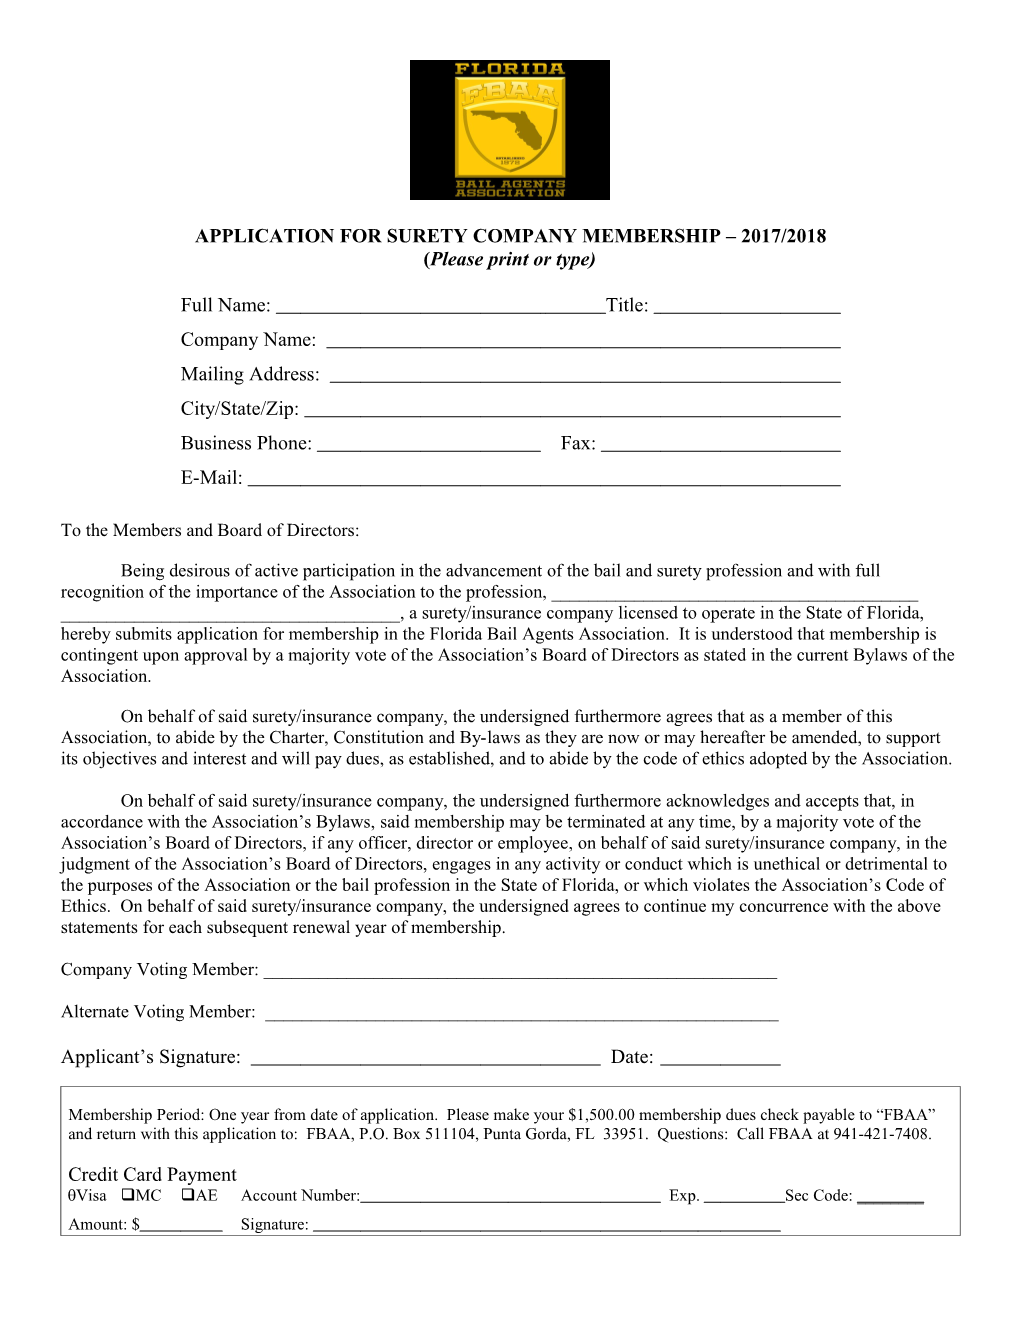 Application for Membership s7